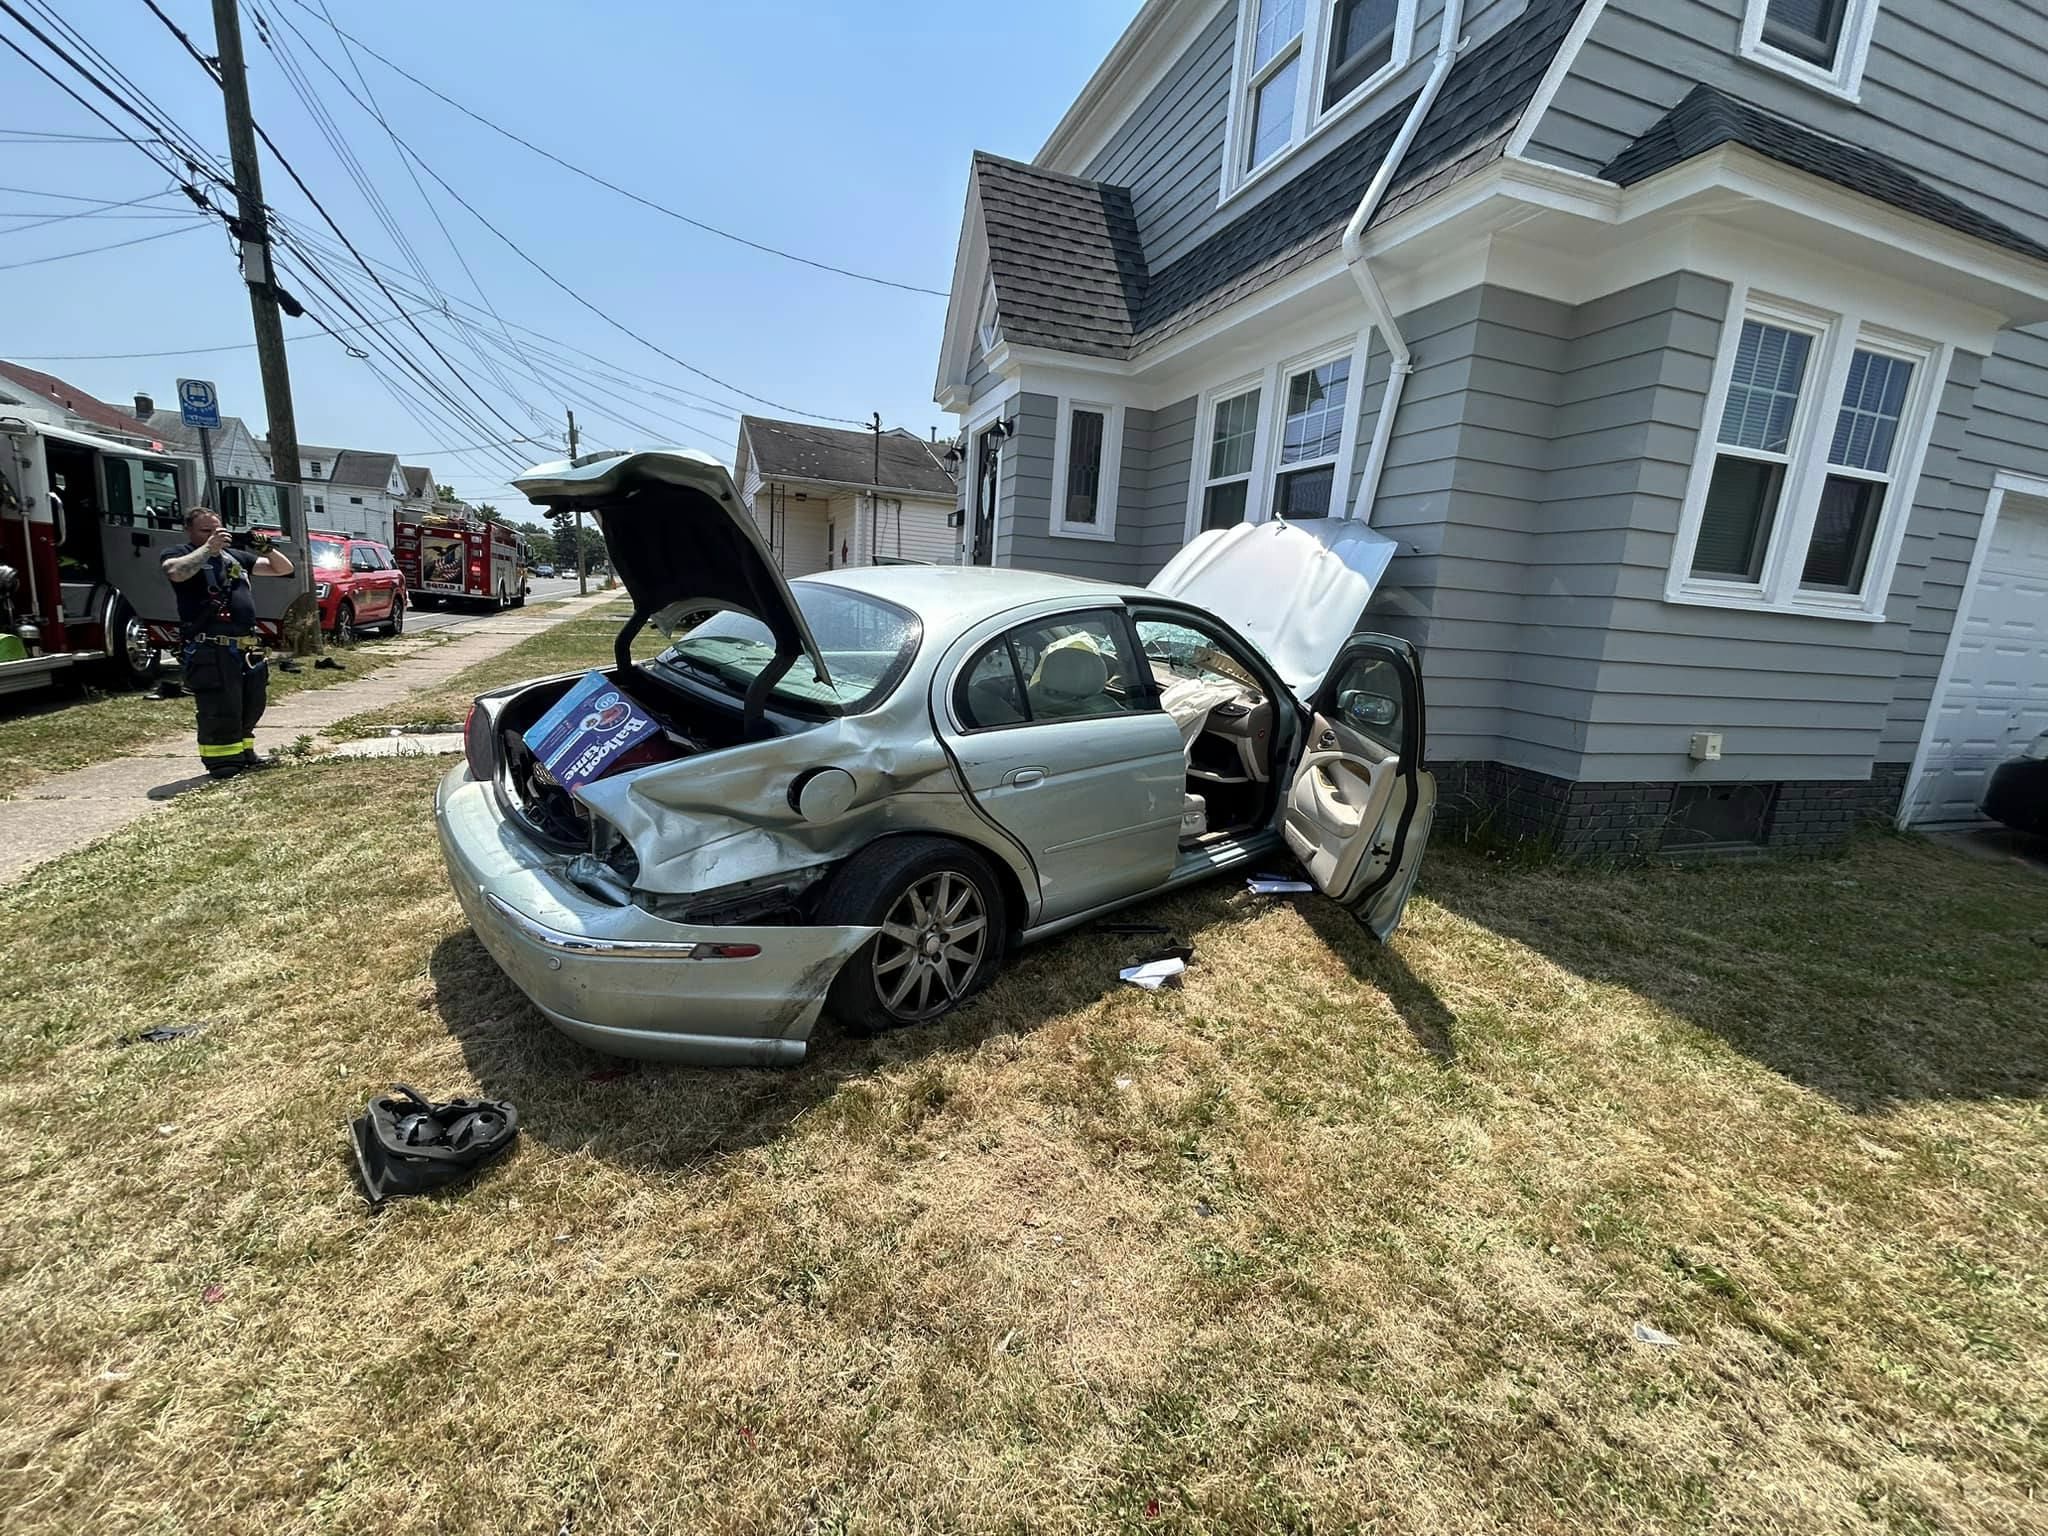 Car crash into Hamden home sent 3 people to hospital, officials say – New Haven Register